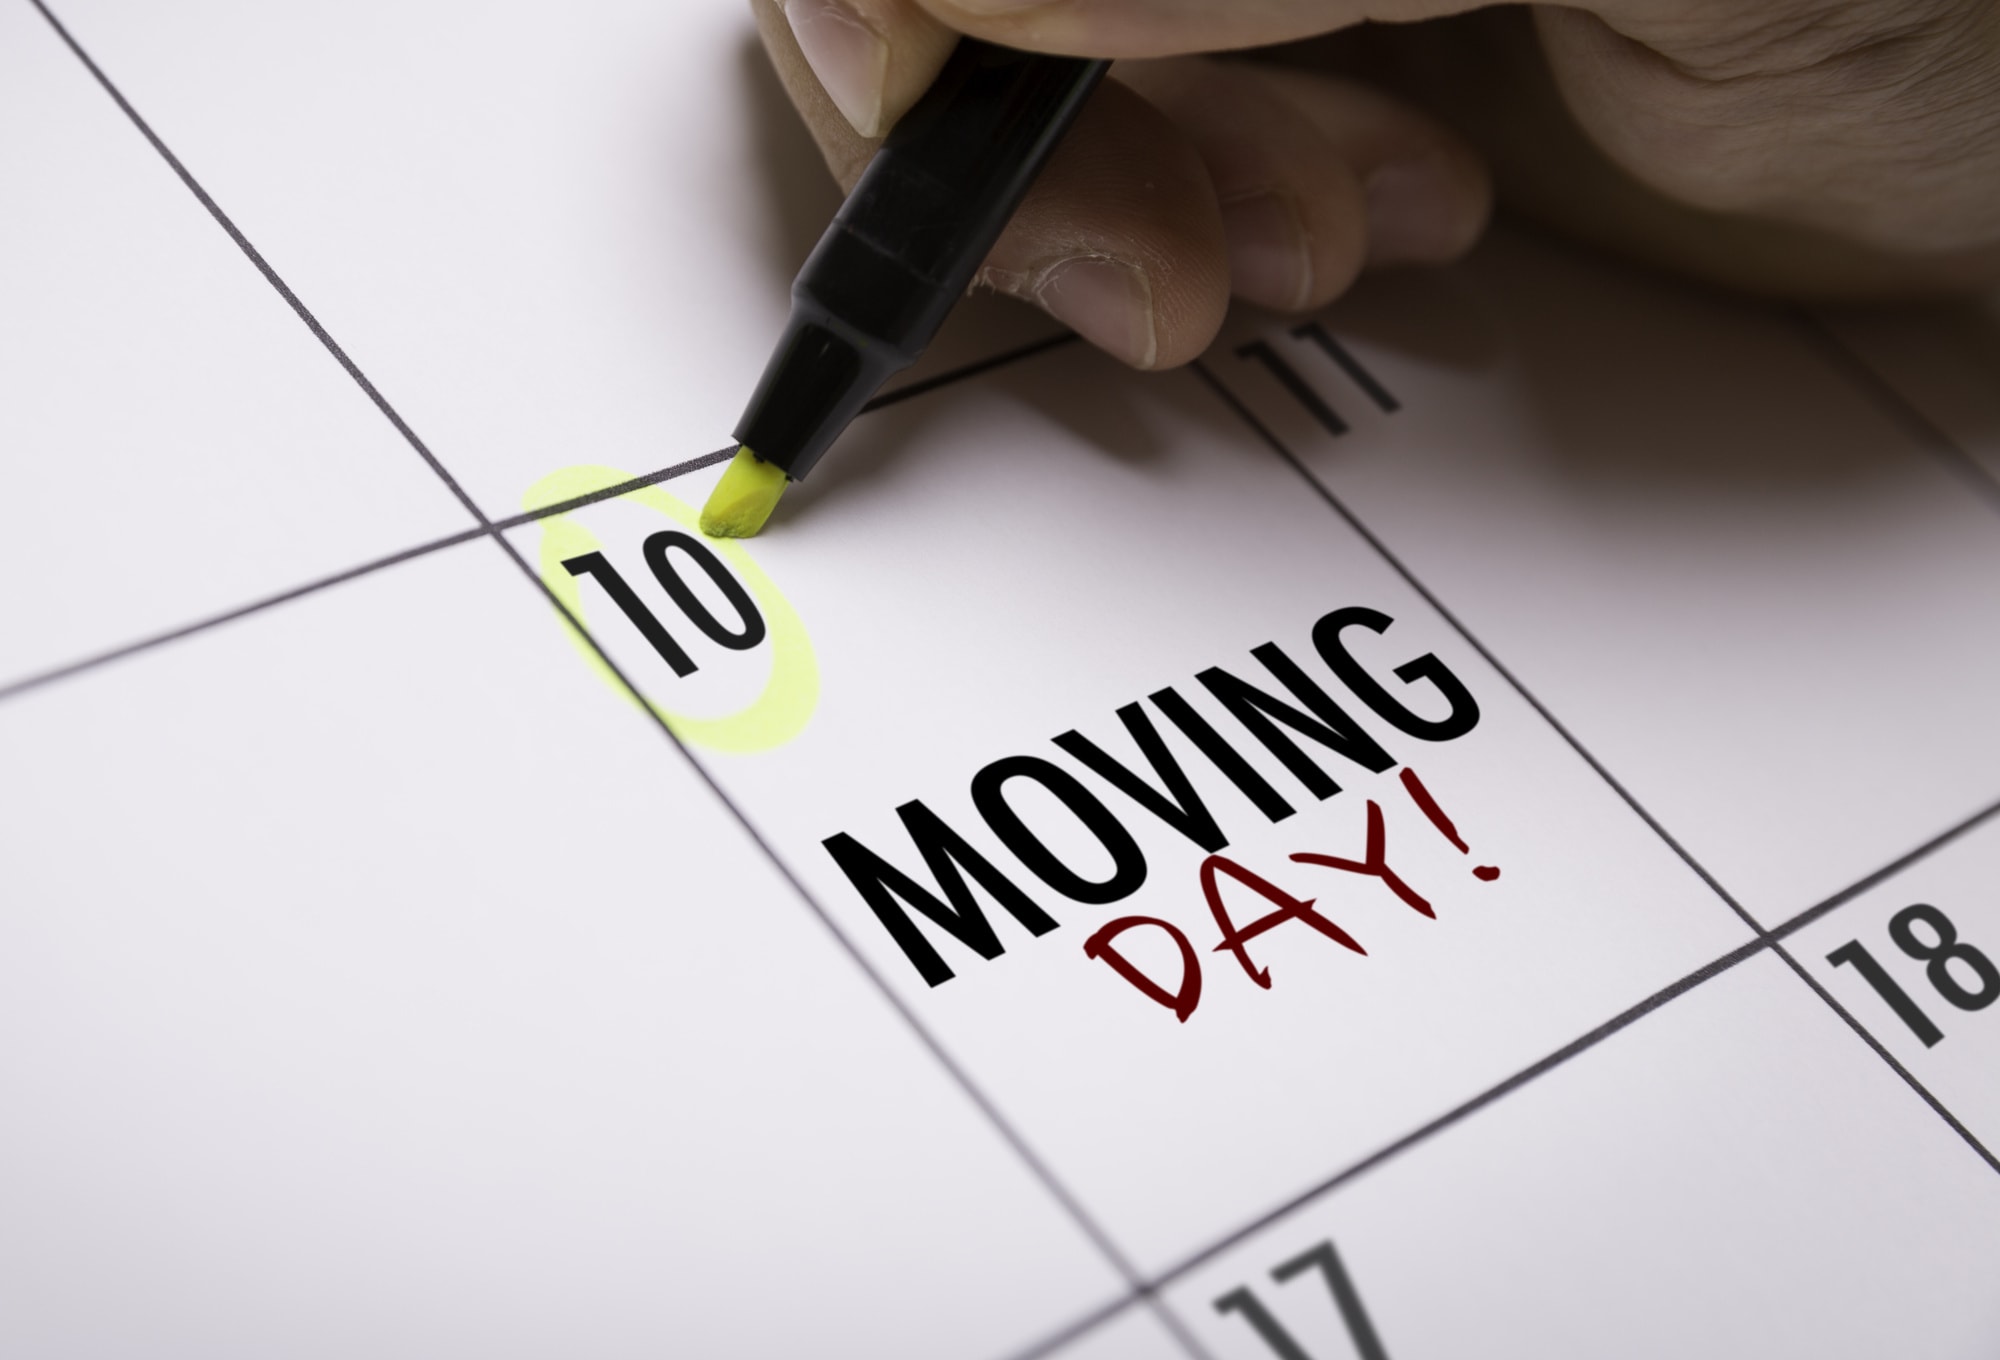 moving day checklist